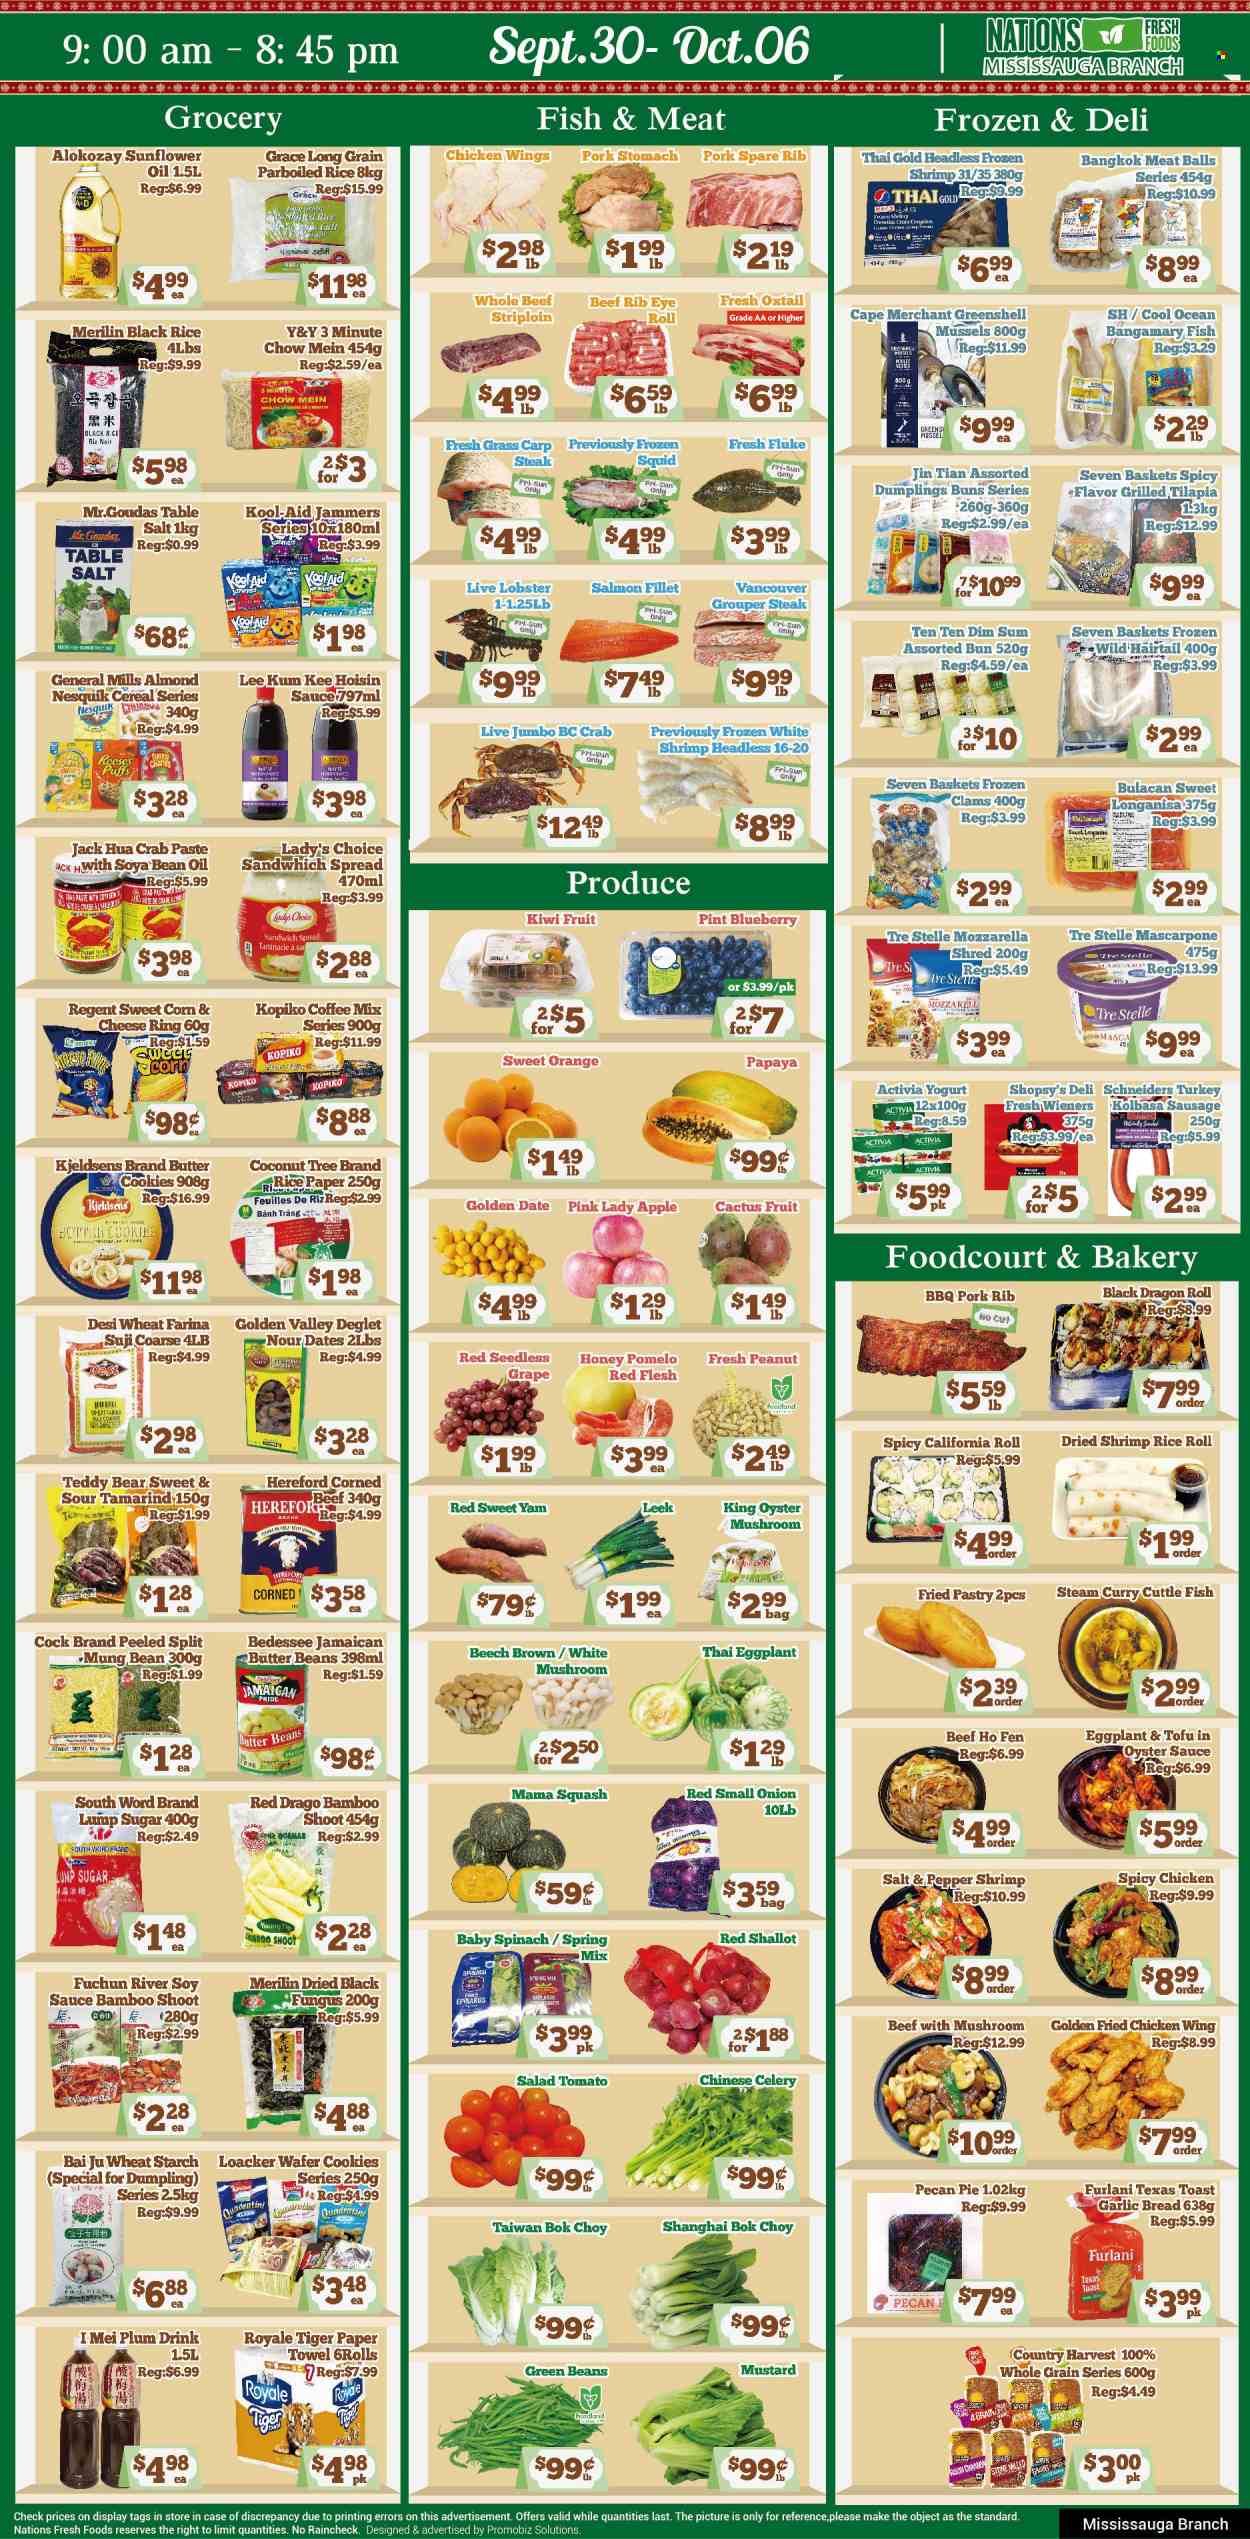 Nations Fresh Foods flyer  - September 30, 2022 - October 06, 2022.